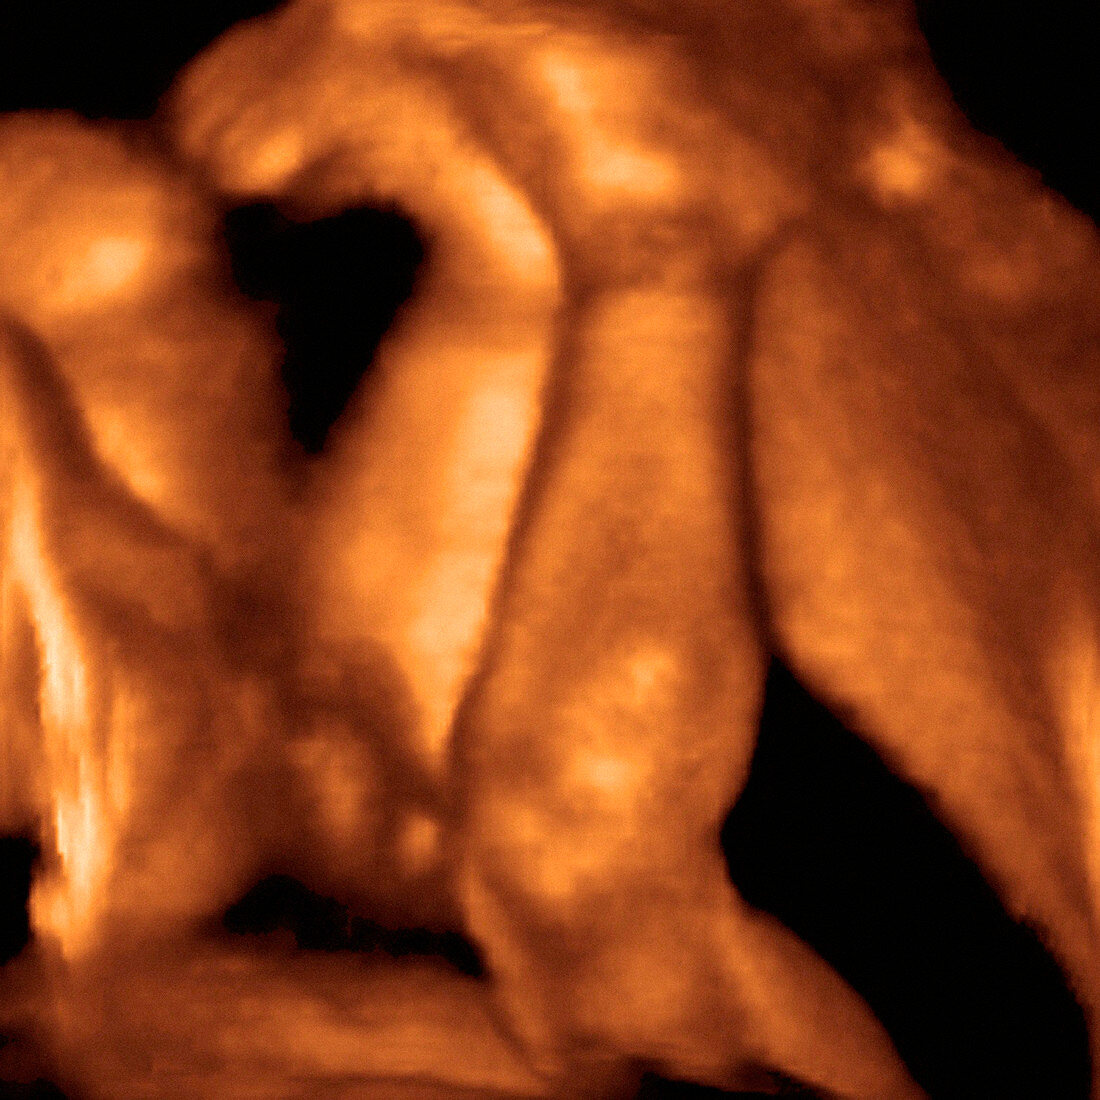 Foetus' legs,3-D ultrasound scan